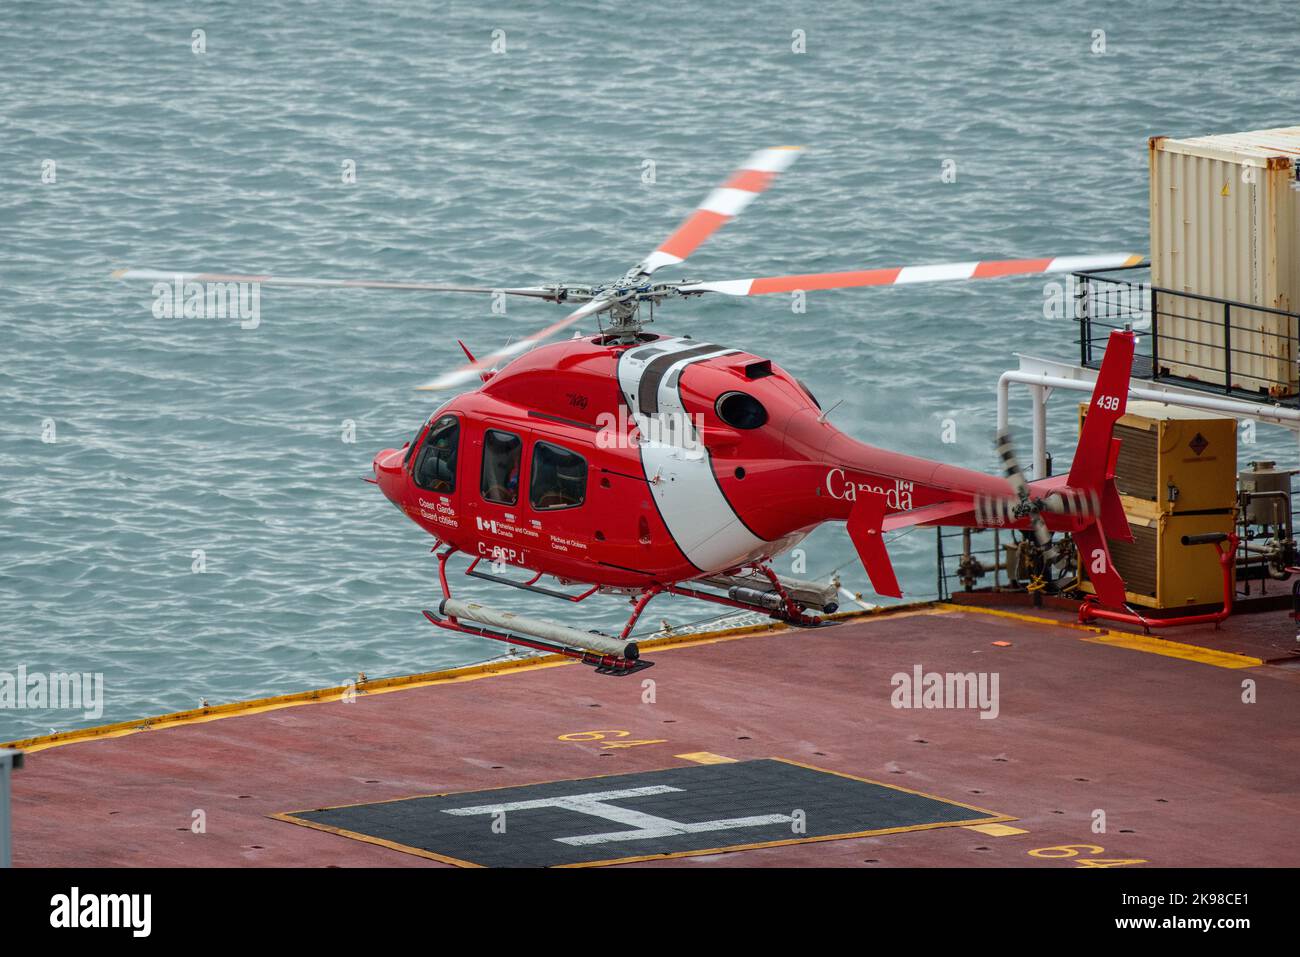 St. John's, Newfoundland, Canada-November 2022: A Canadian Coast Guard cormorant helicopter or chopper on the helipad of a large Coast Guard ship. Stock Photo